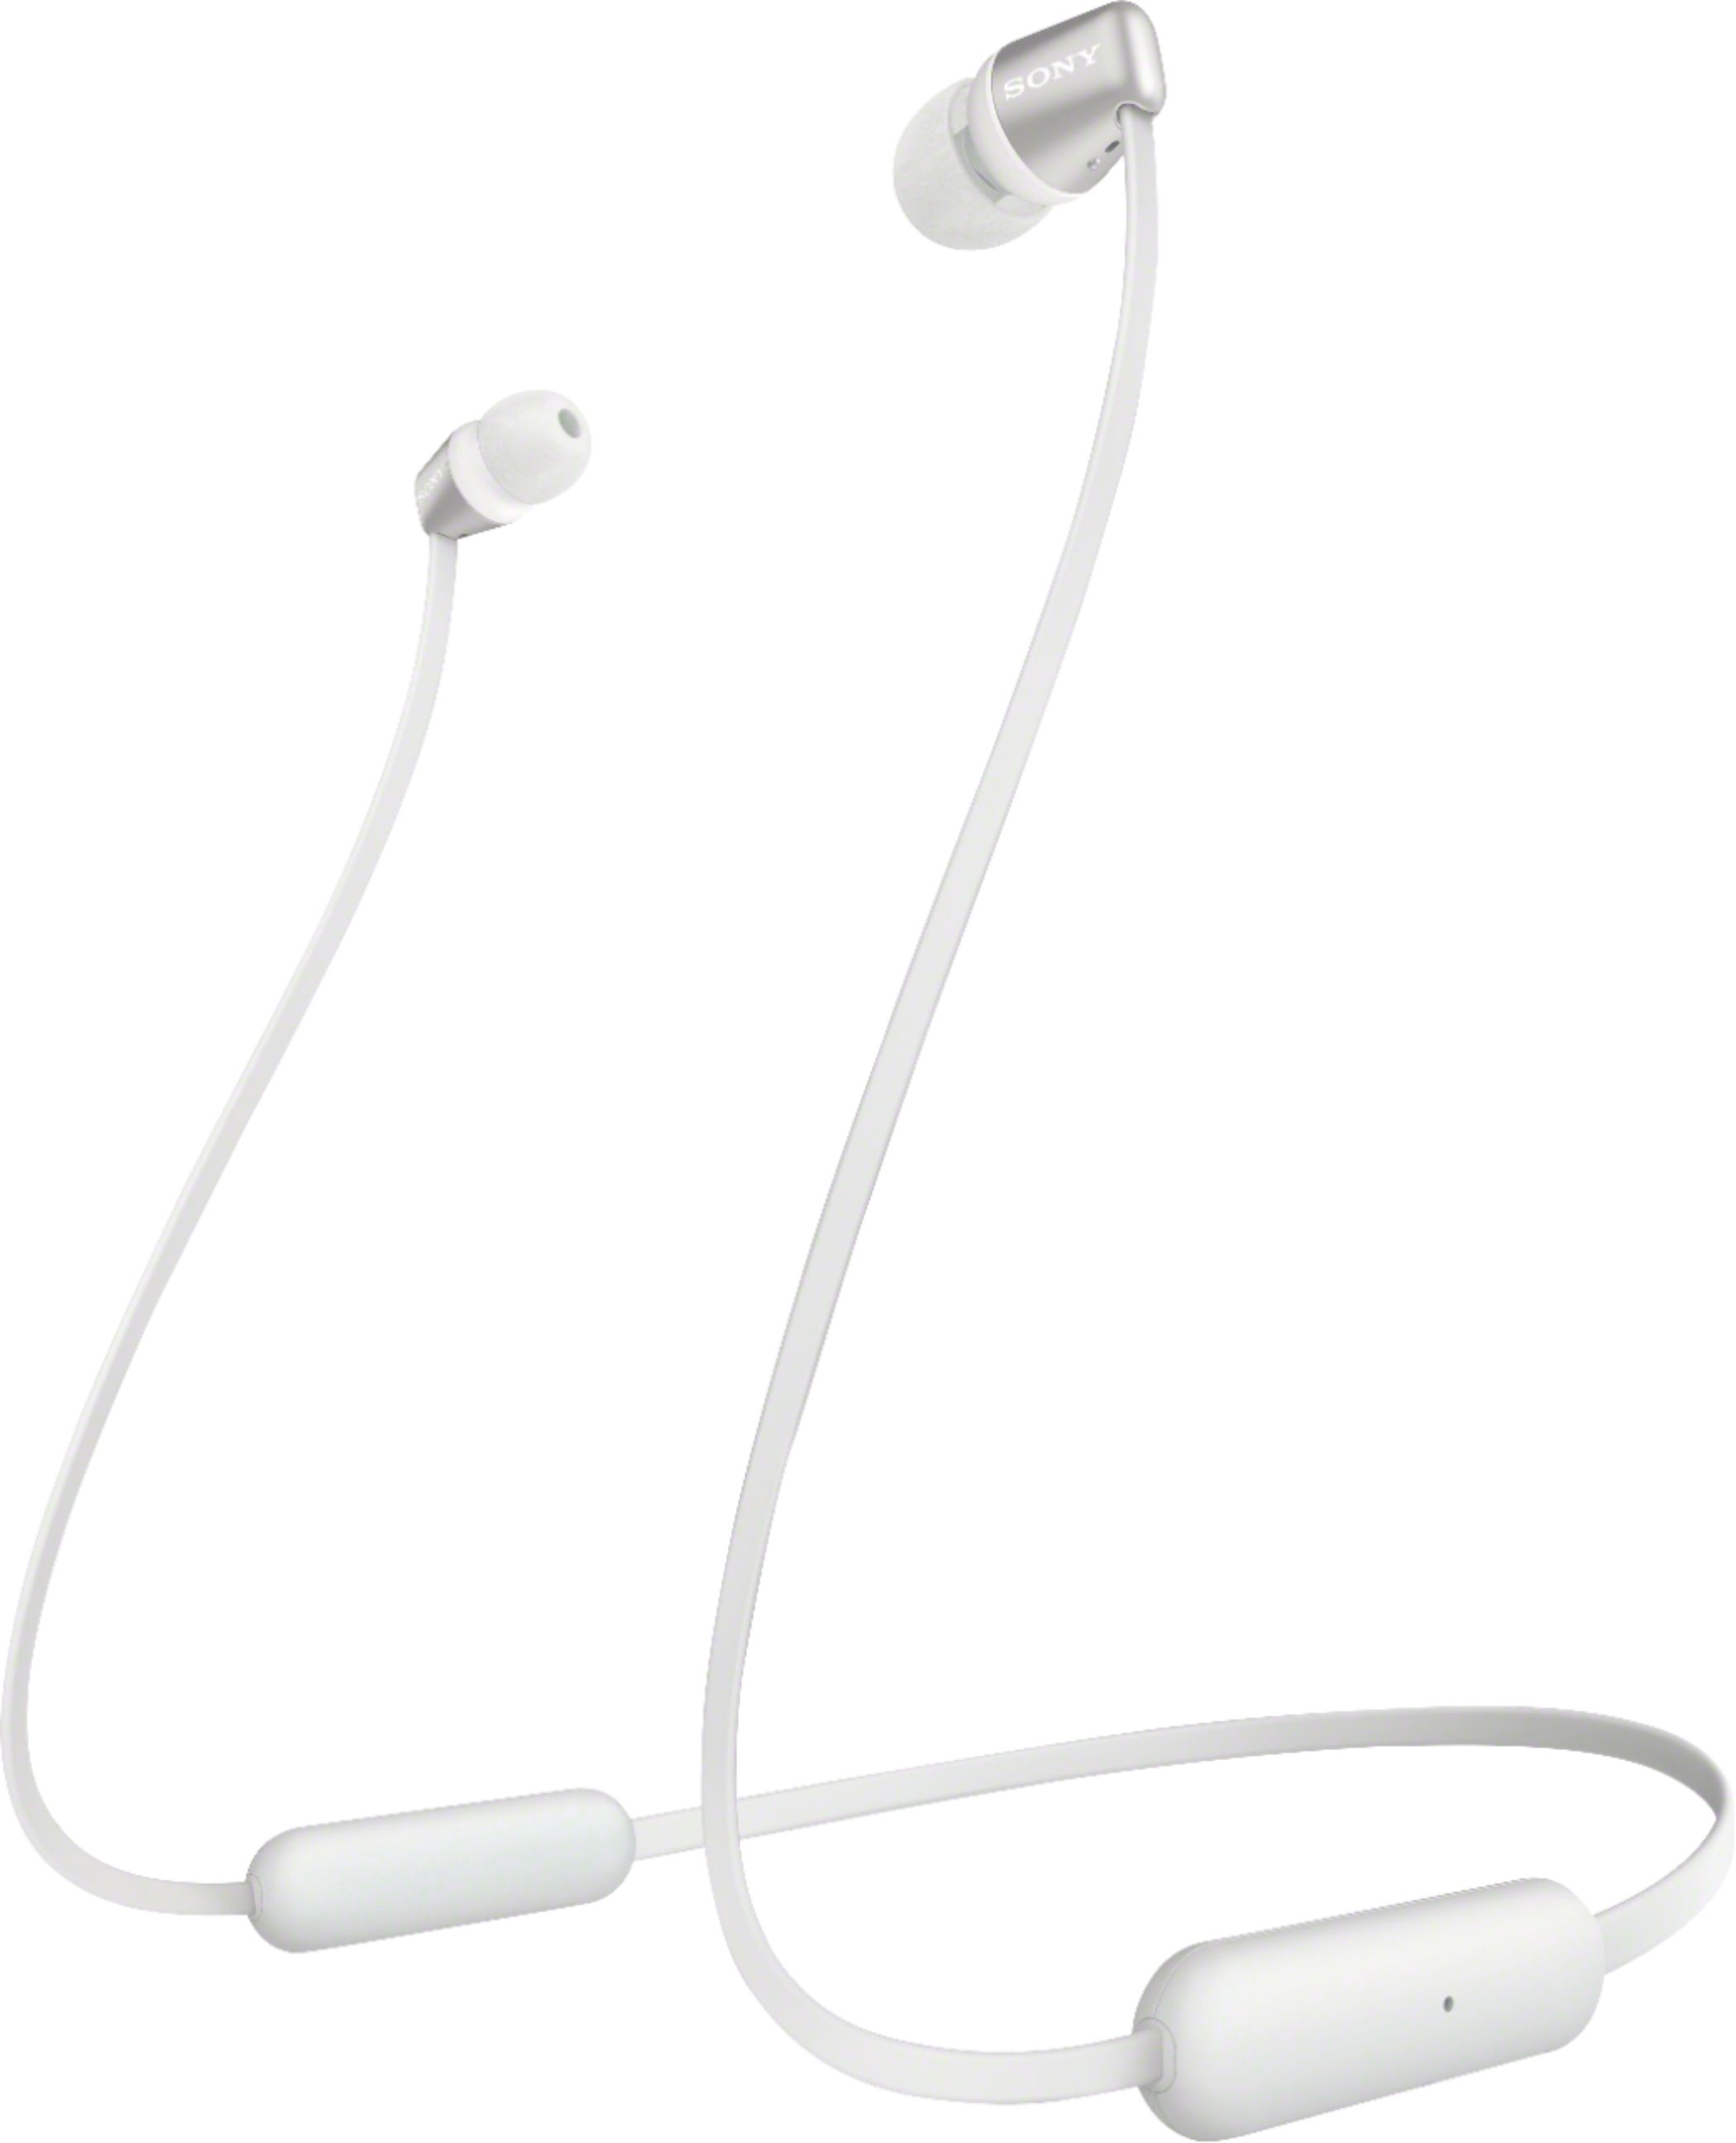 Angle View: Sudio - Tolv In-ear True Wireless Headphones - Black